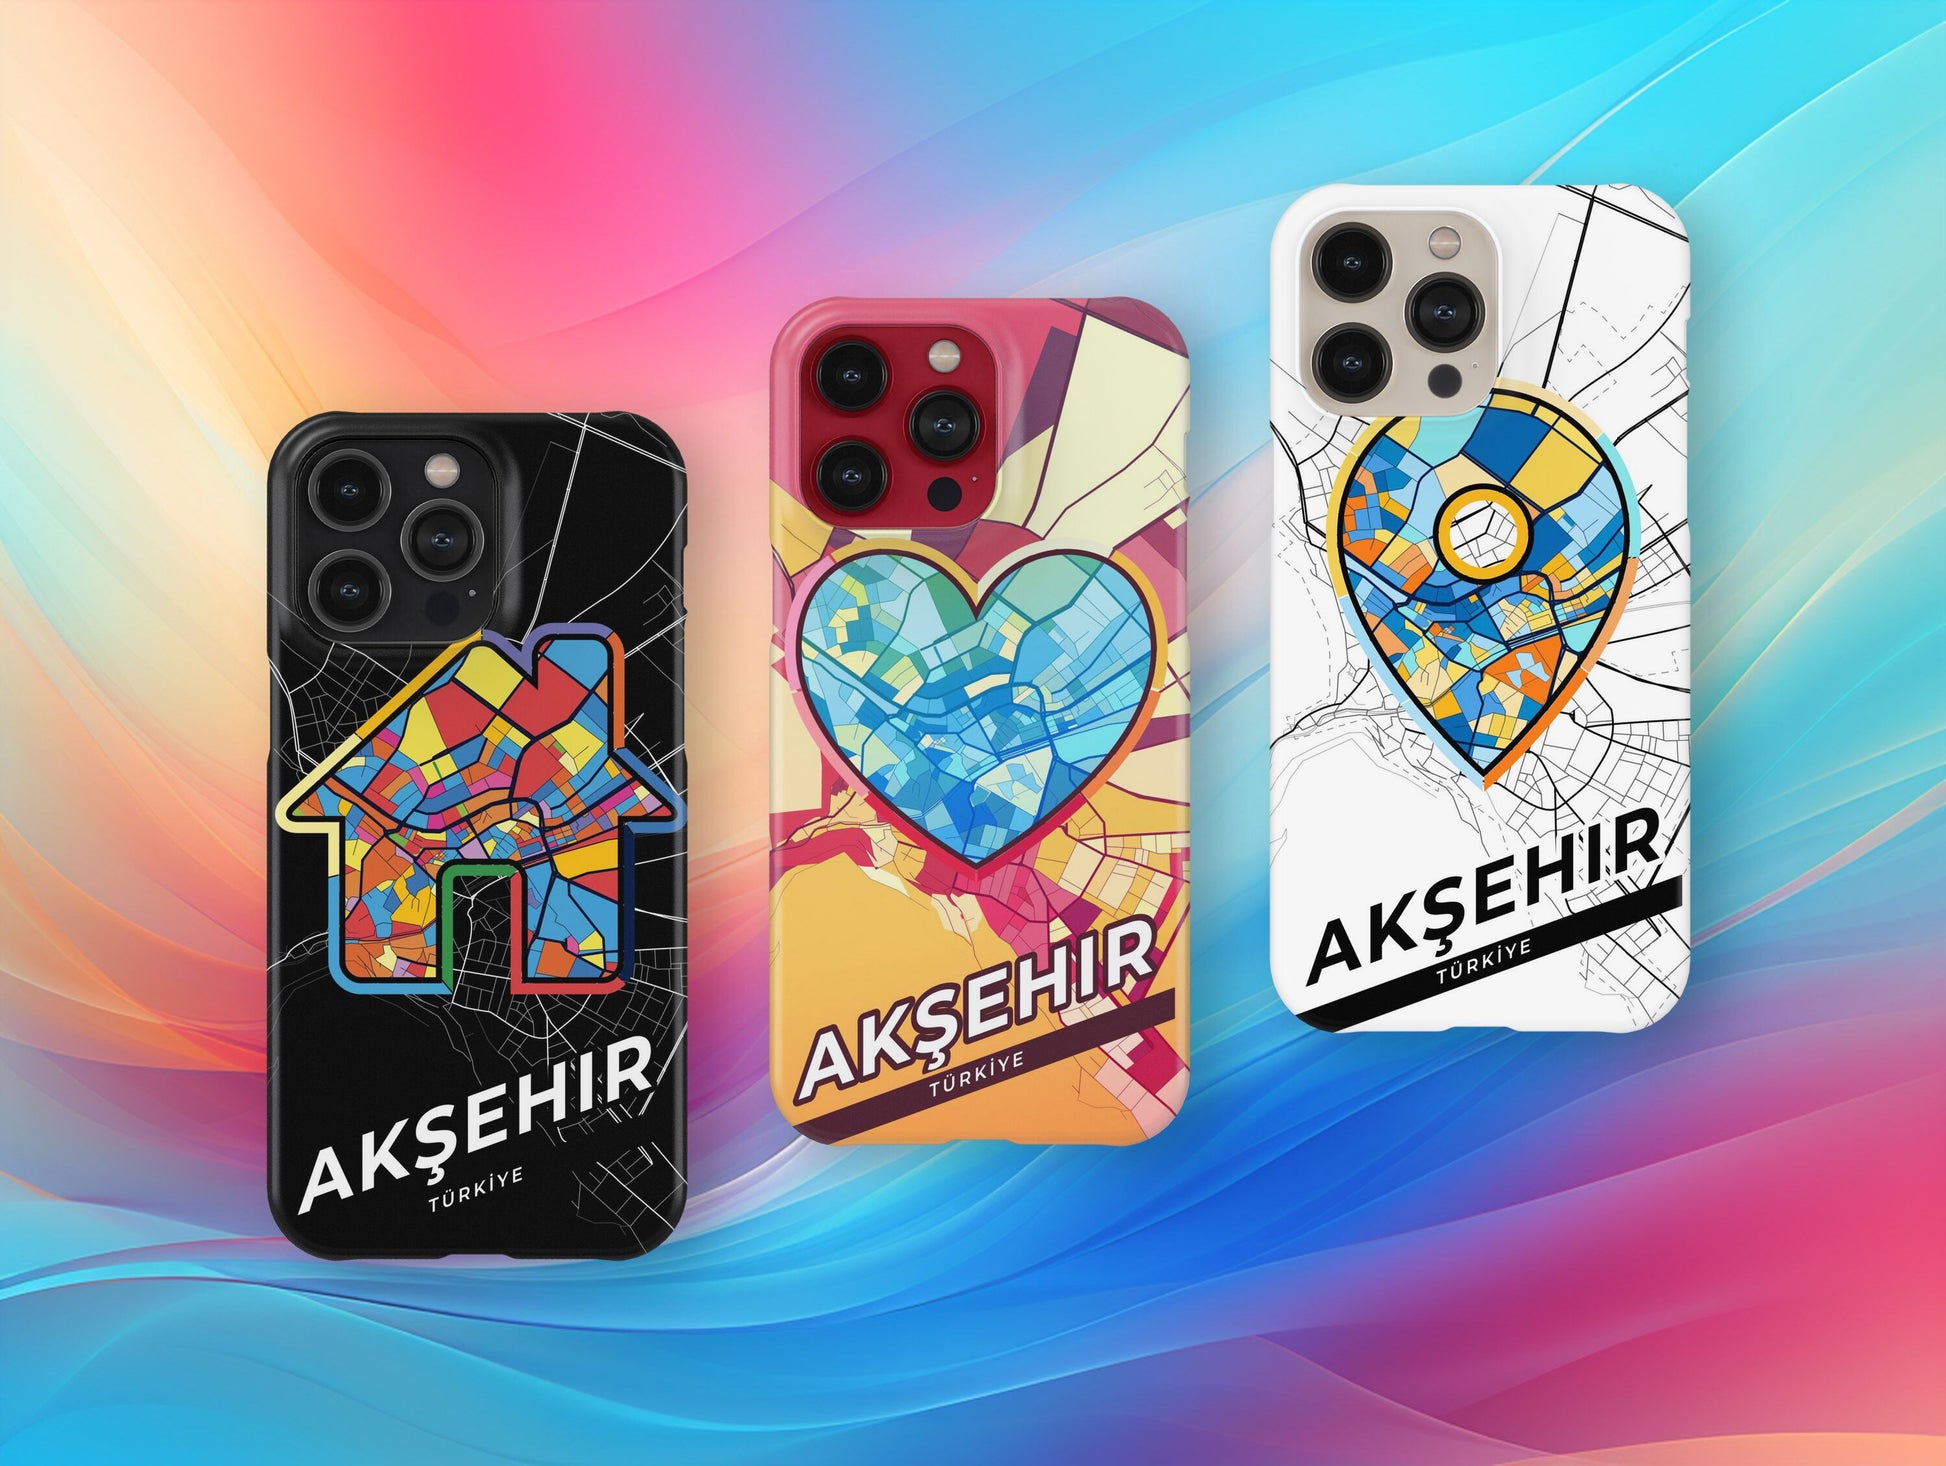 Akşehir Turkey slim phone case with colorful icon. Birthday, wedding or housewarming gift. Couple match cases.